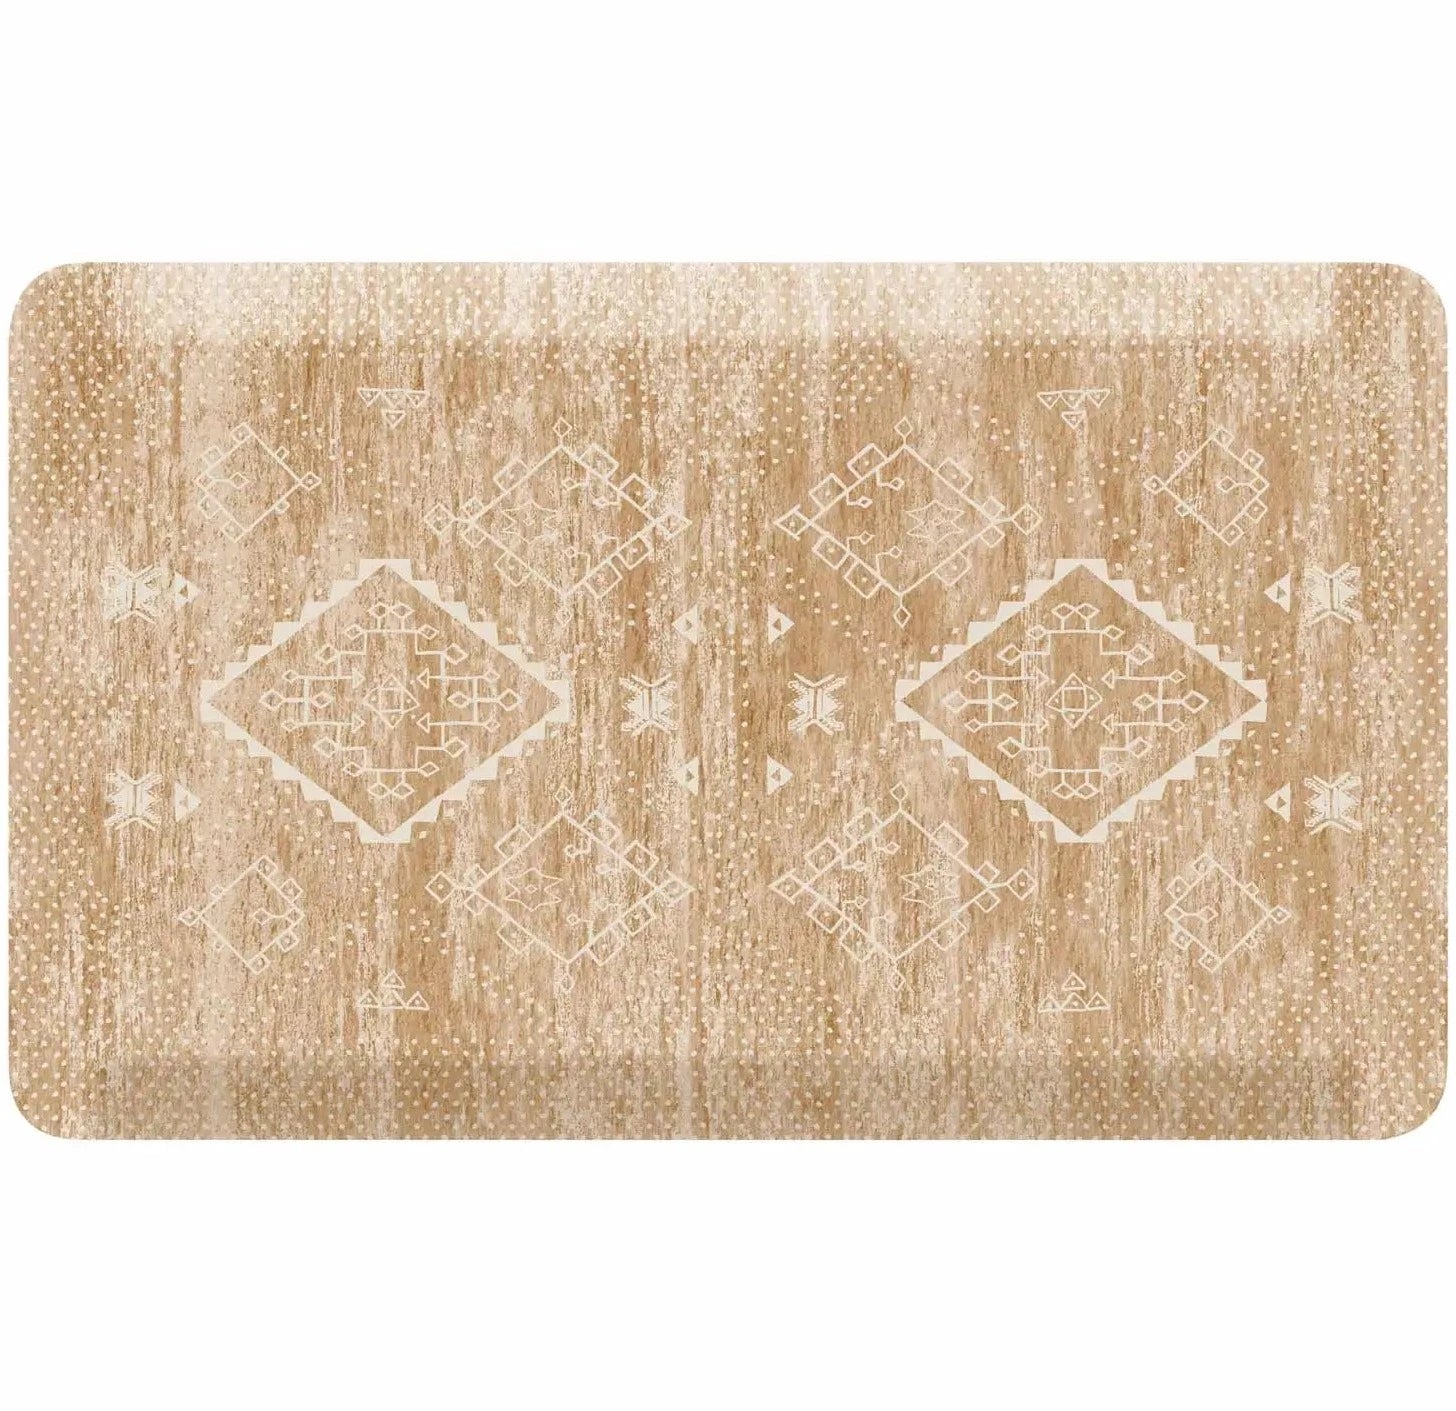 Ula Amber brown minimal boho pattern kitchen mat in size 22x36